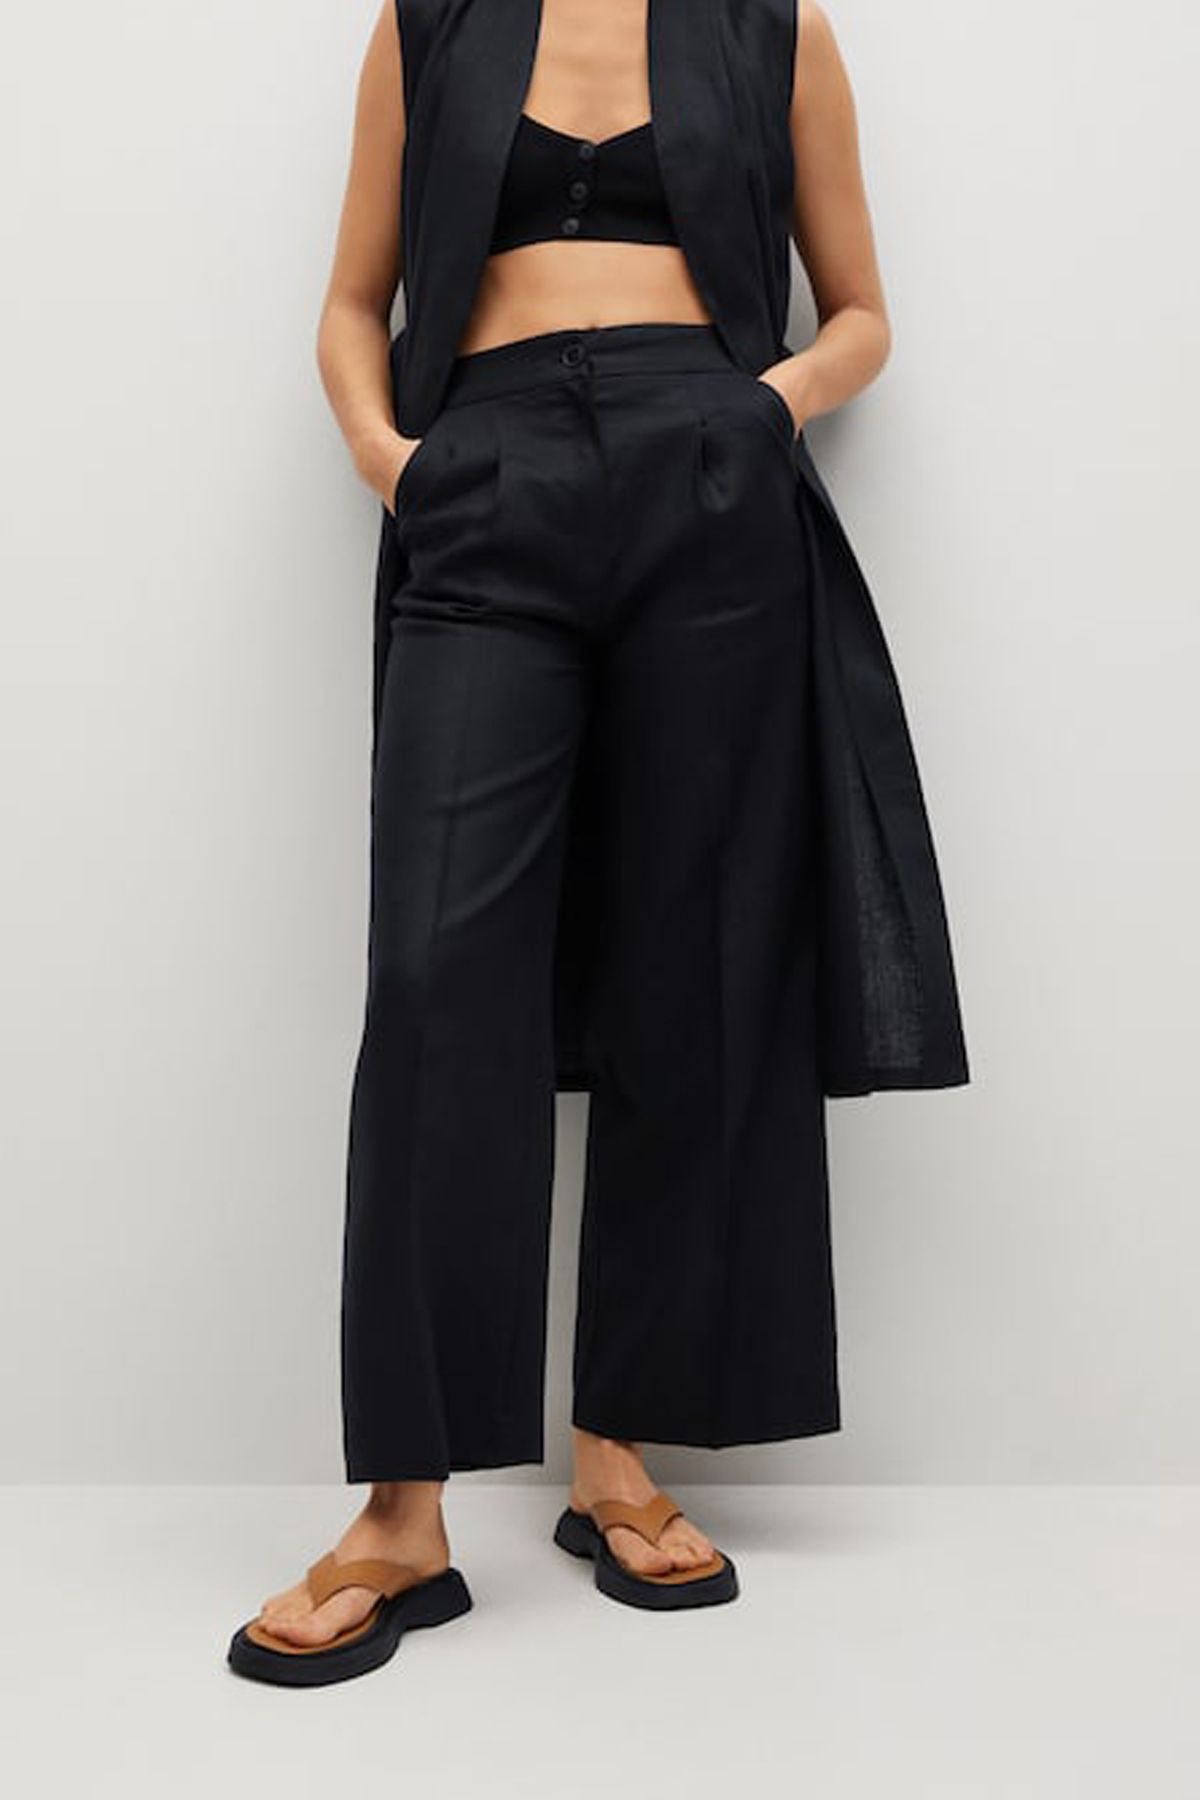 Mango Women's Trousers High Waist Black, Black : Amazon.de: Fashion